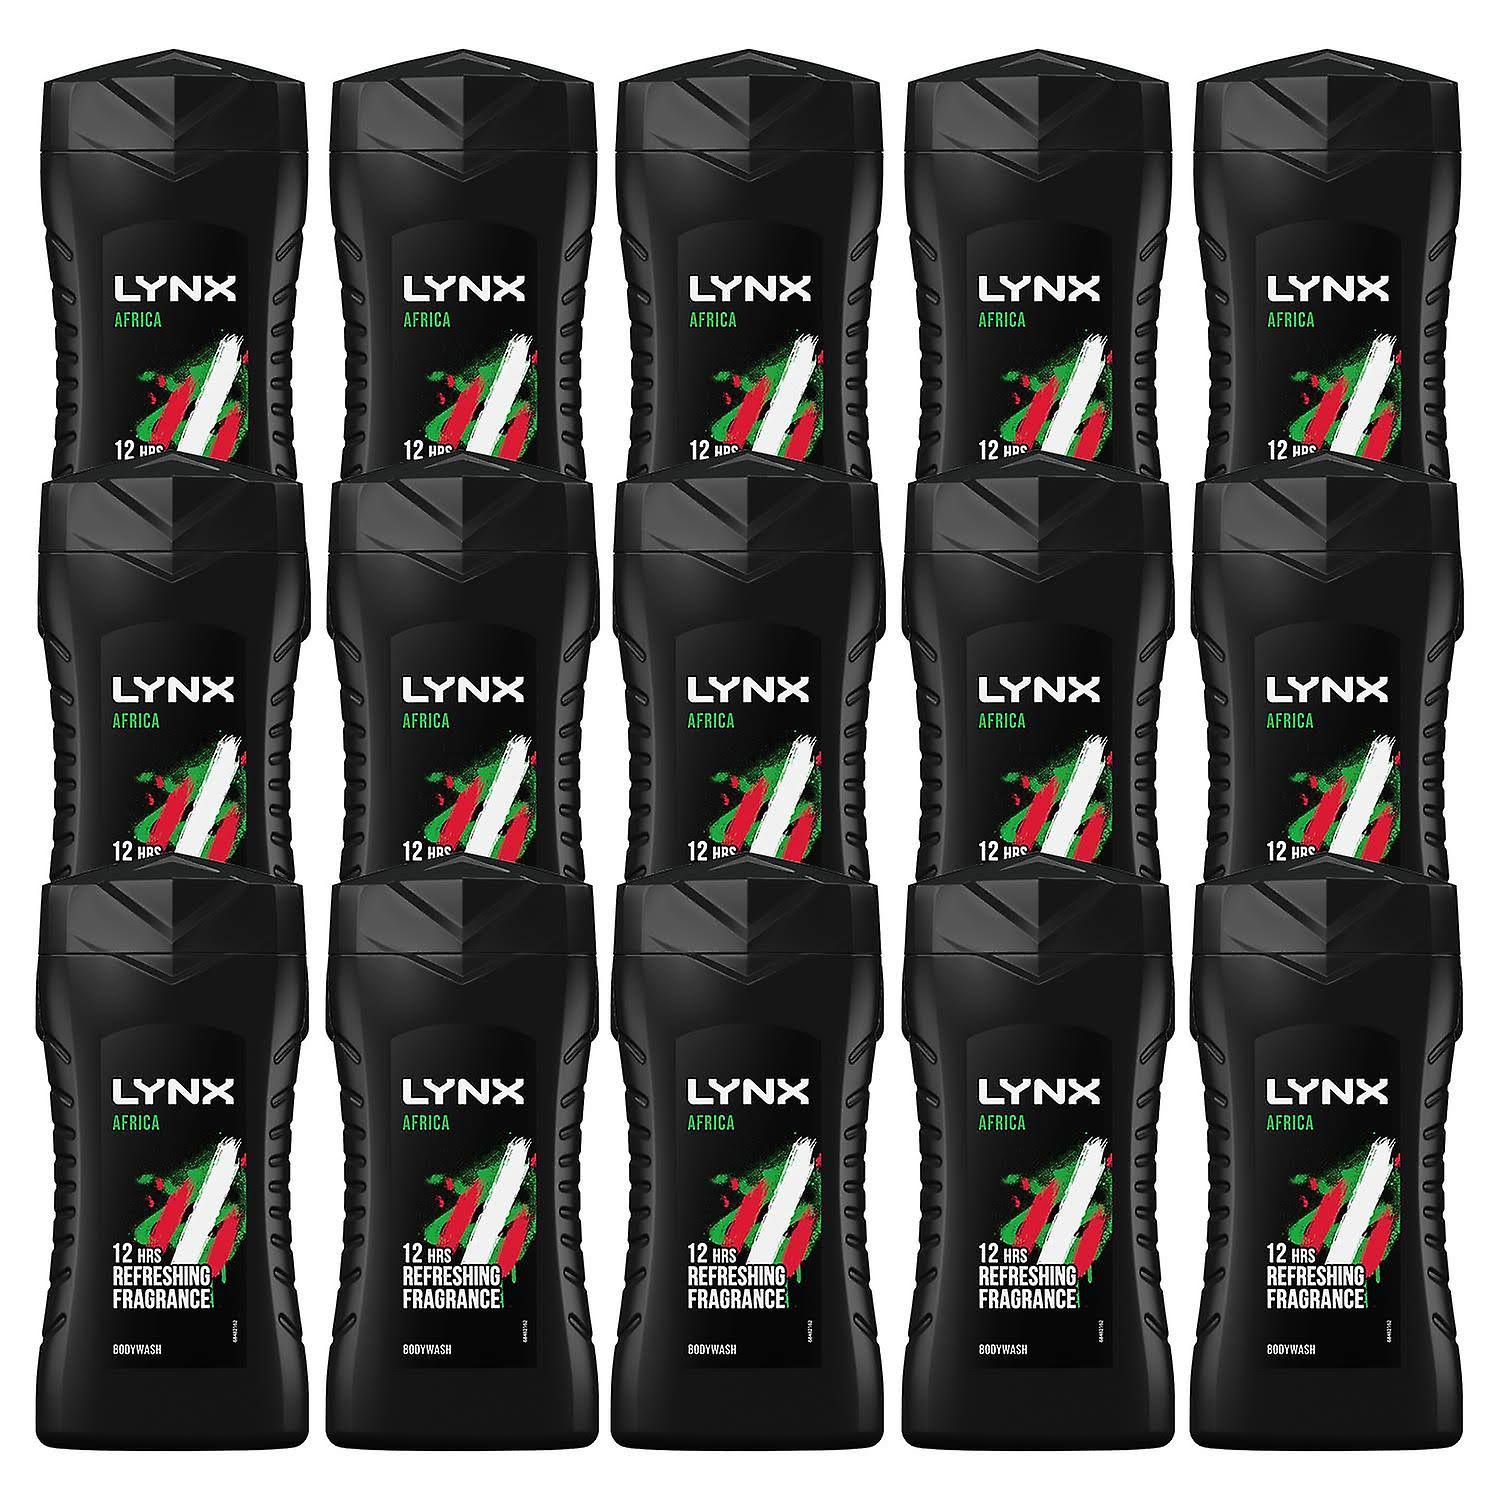 Lynx Energy Boost Shower Gel Body Wash, Africa, 15 Pack, 50ml